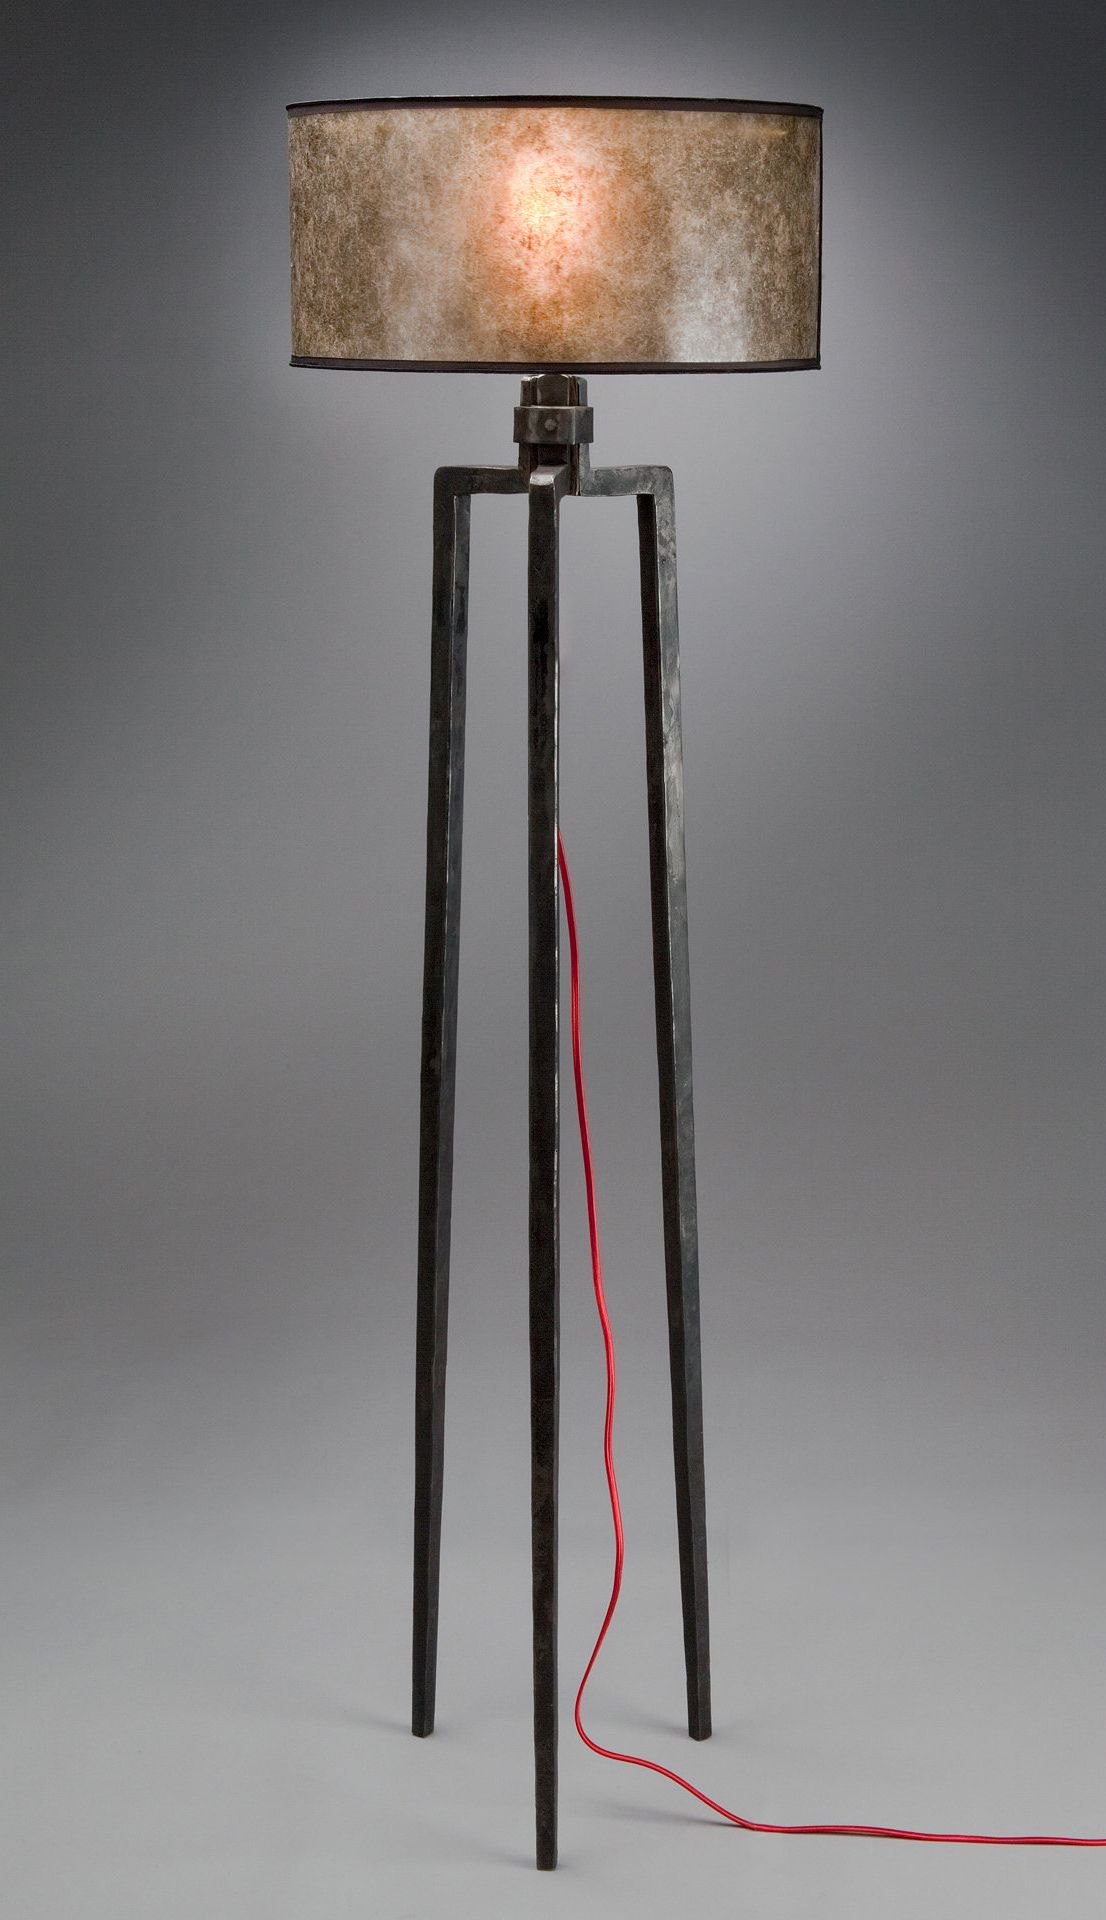 Steel Standing Lamps Intended For Preferred Tripod Floor Lampluke Proctor (metal Floor Lamp) (View 4 of 15)